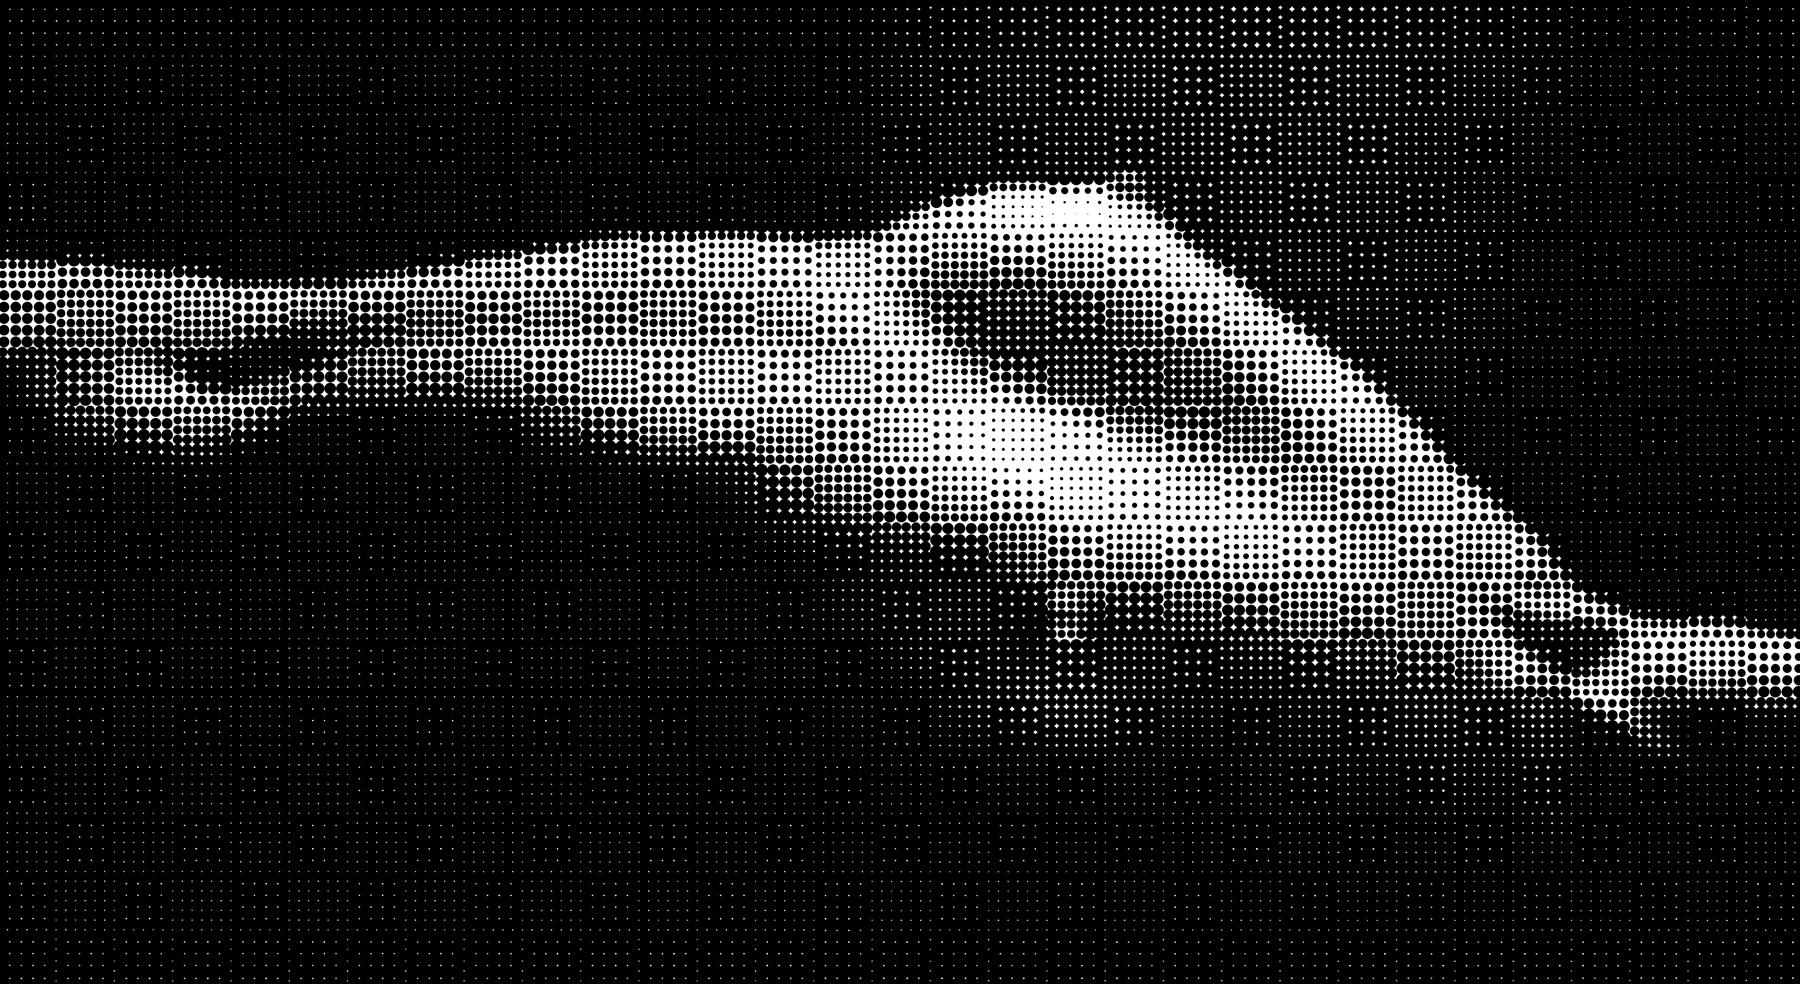 Stephen Bezas Nude Photograph - Nude "Torso"